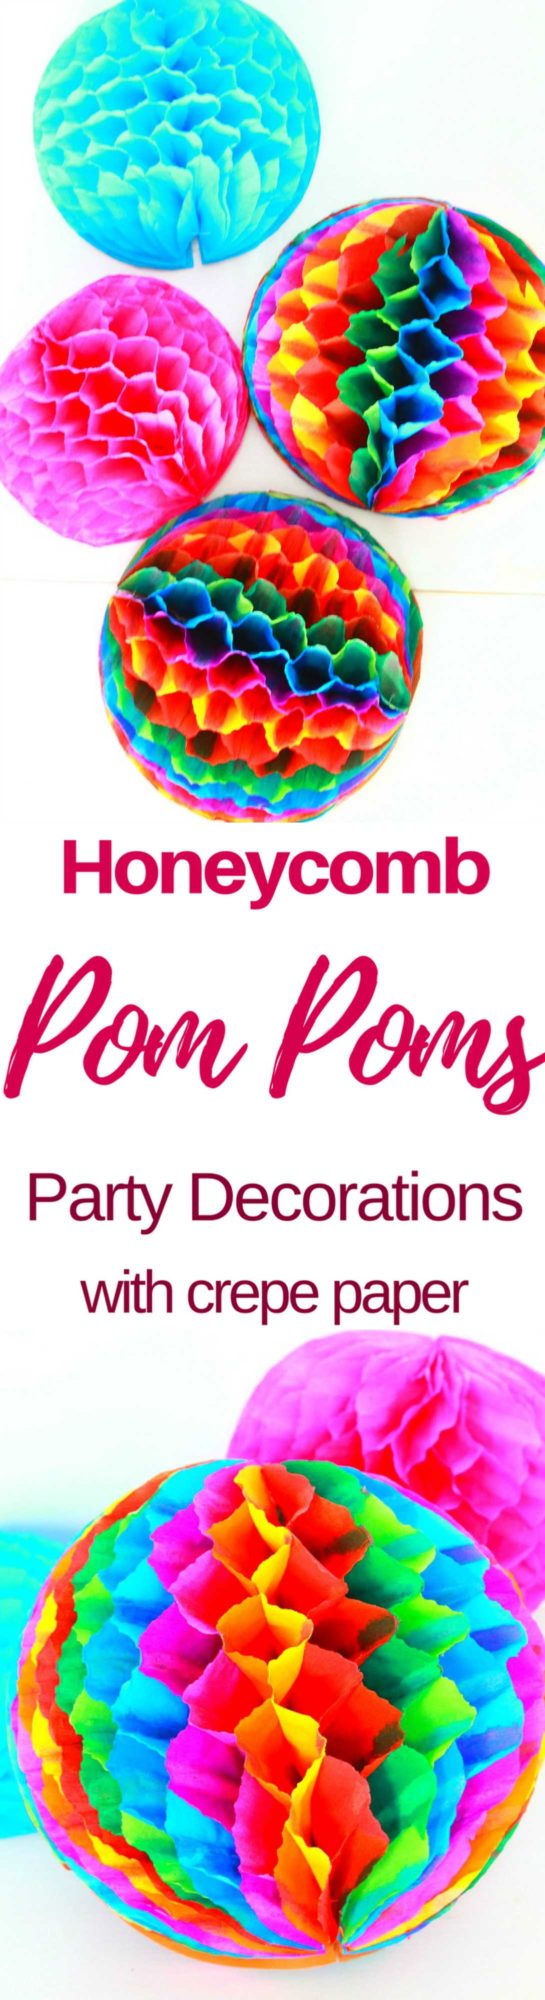 Honeycomb pom poms